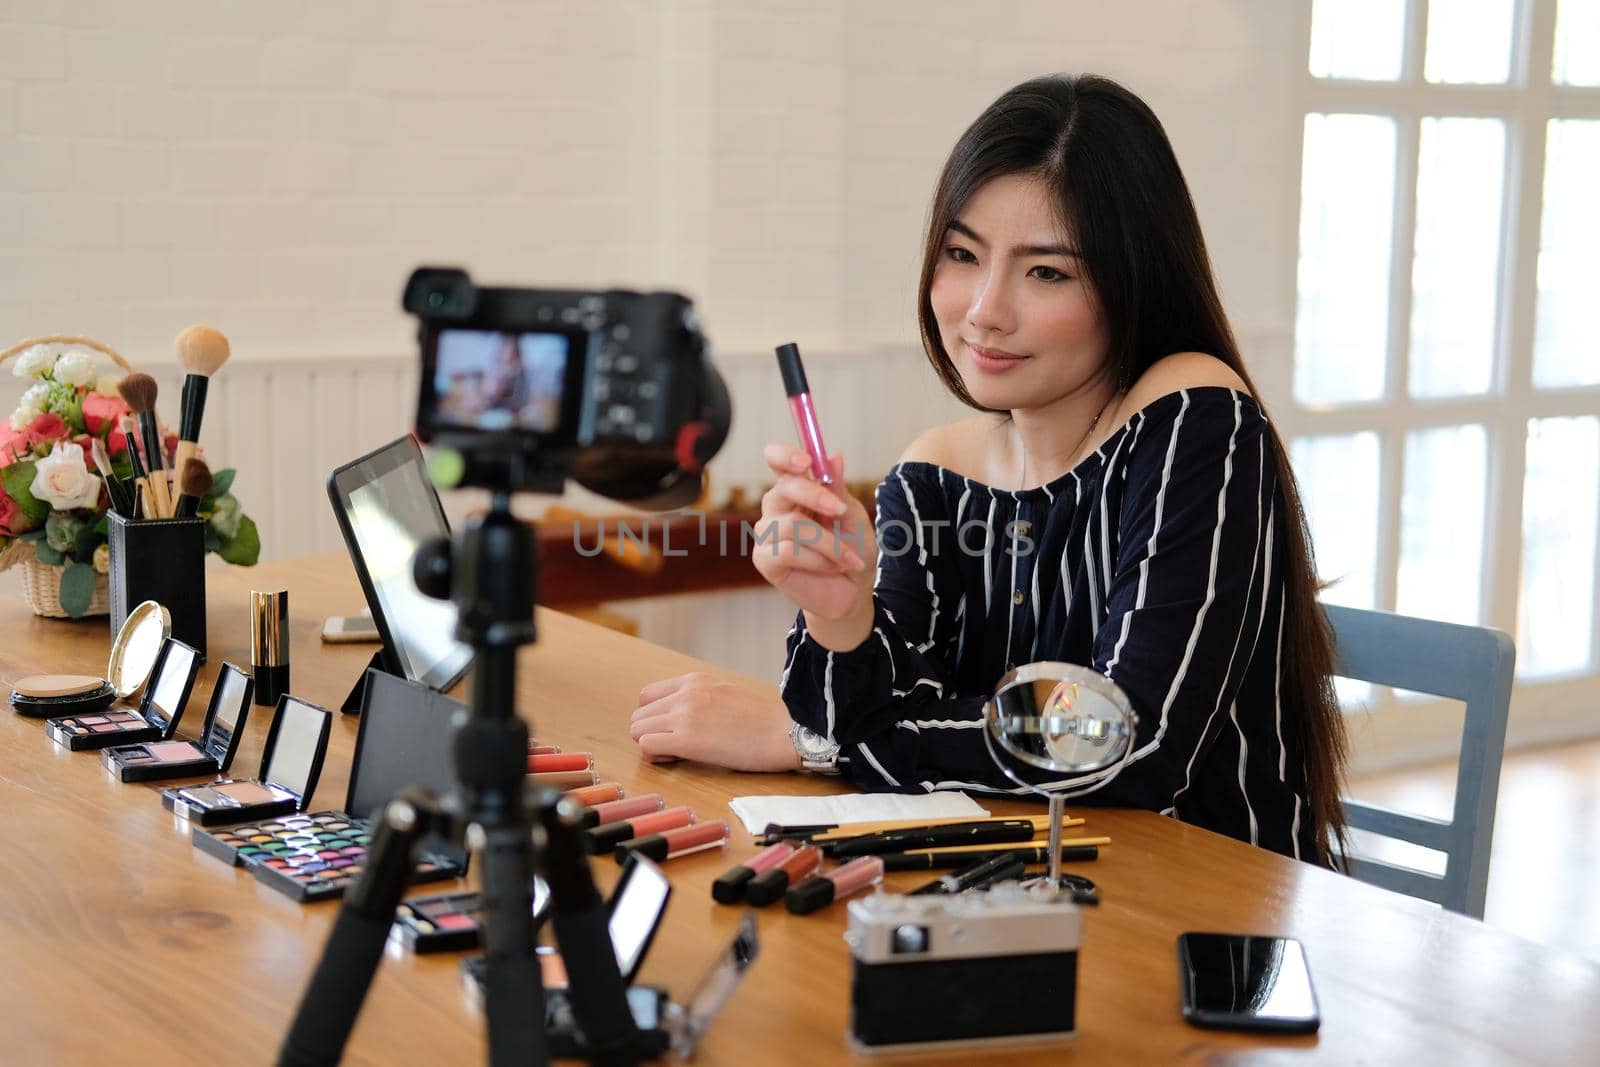 beauty blogger live broadcasting cosmetic makeup tutorial on social media. vlogger recording vlog video. influencer marketing